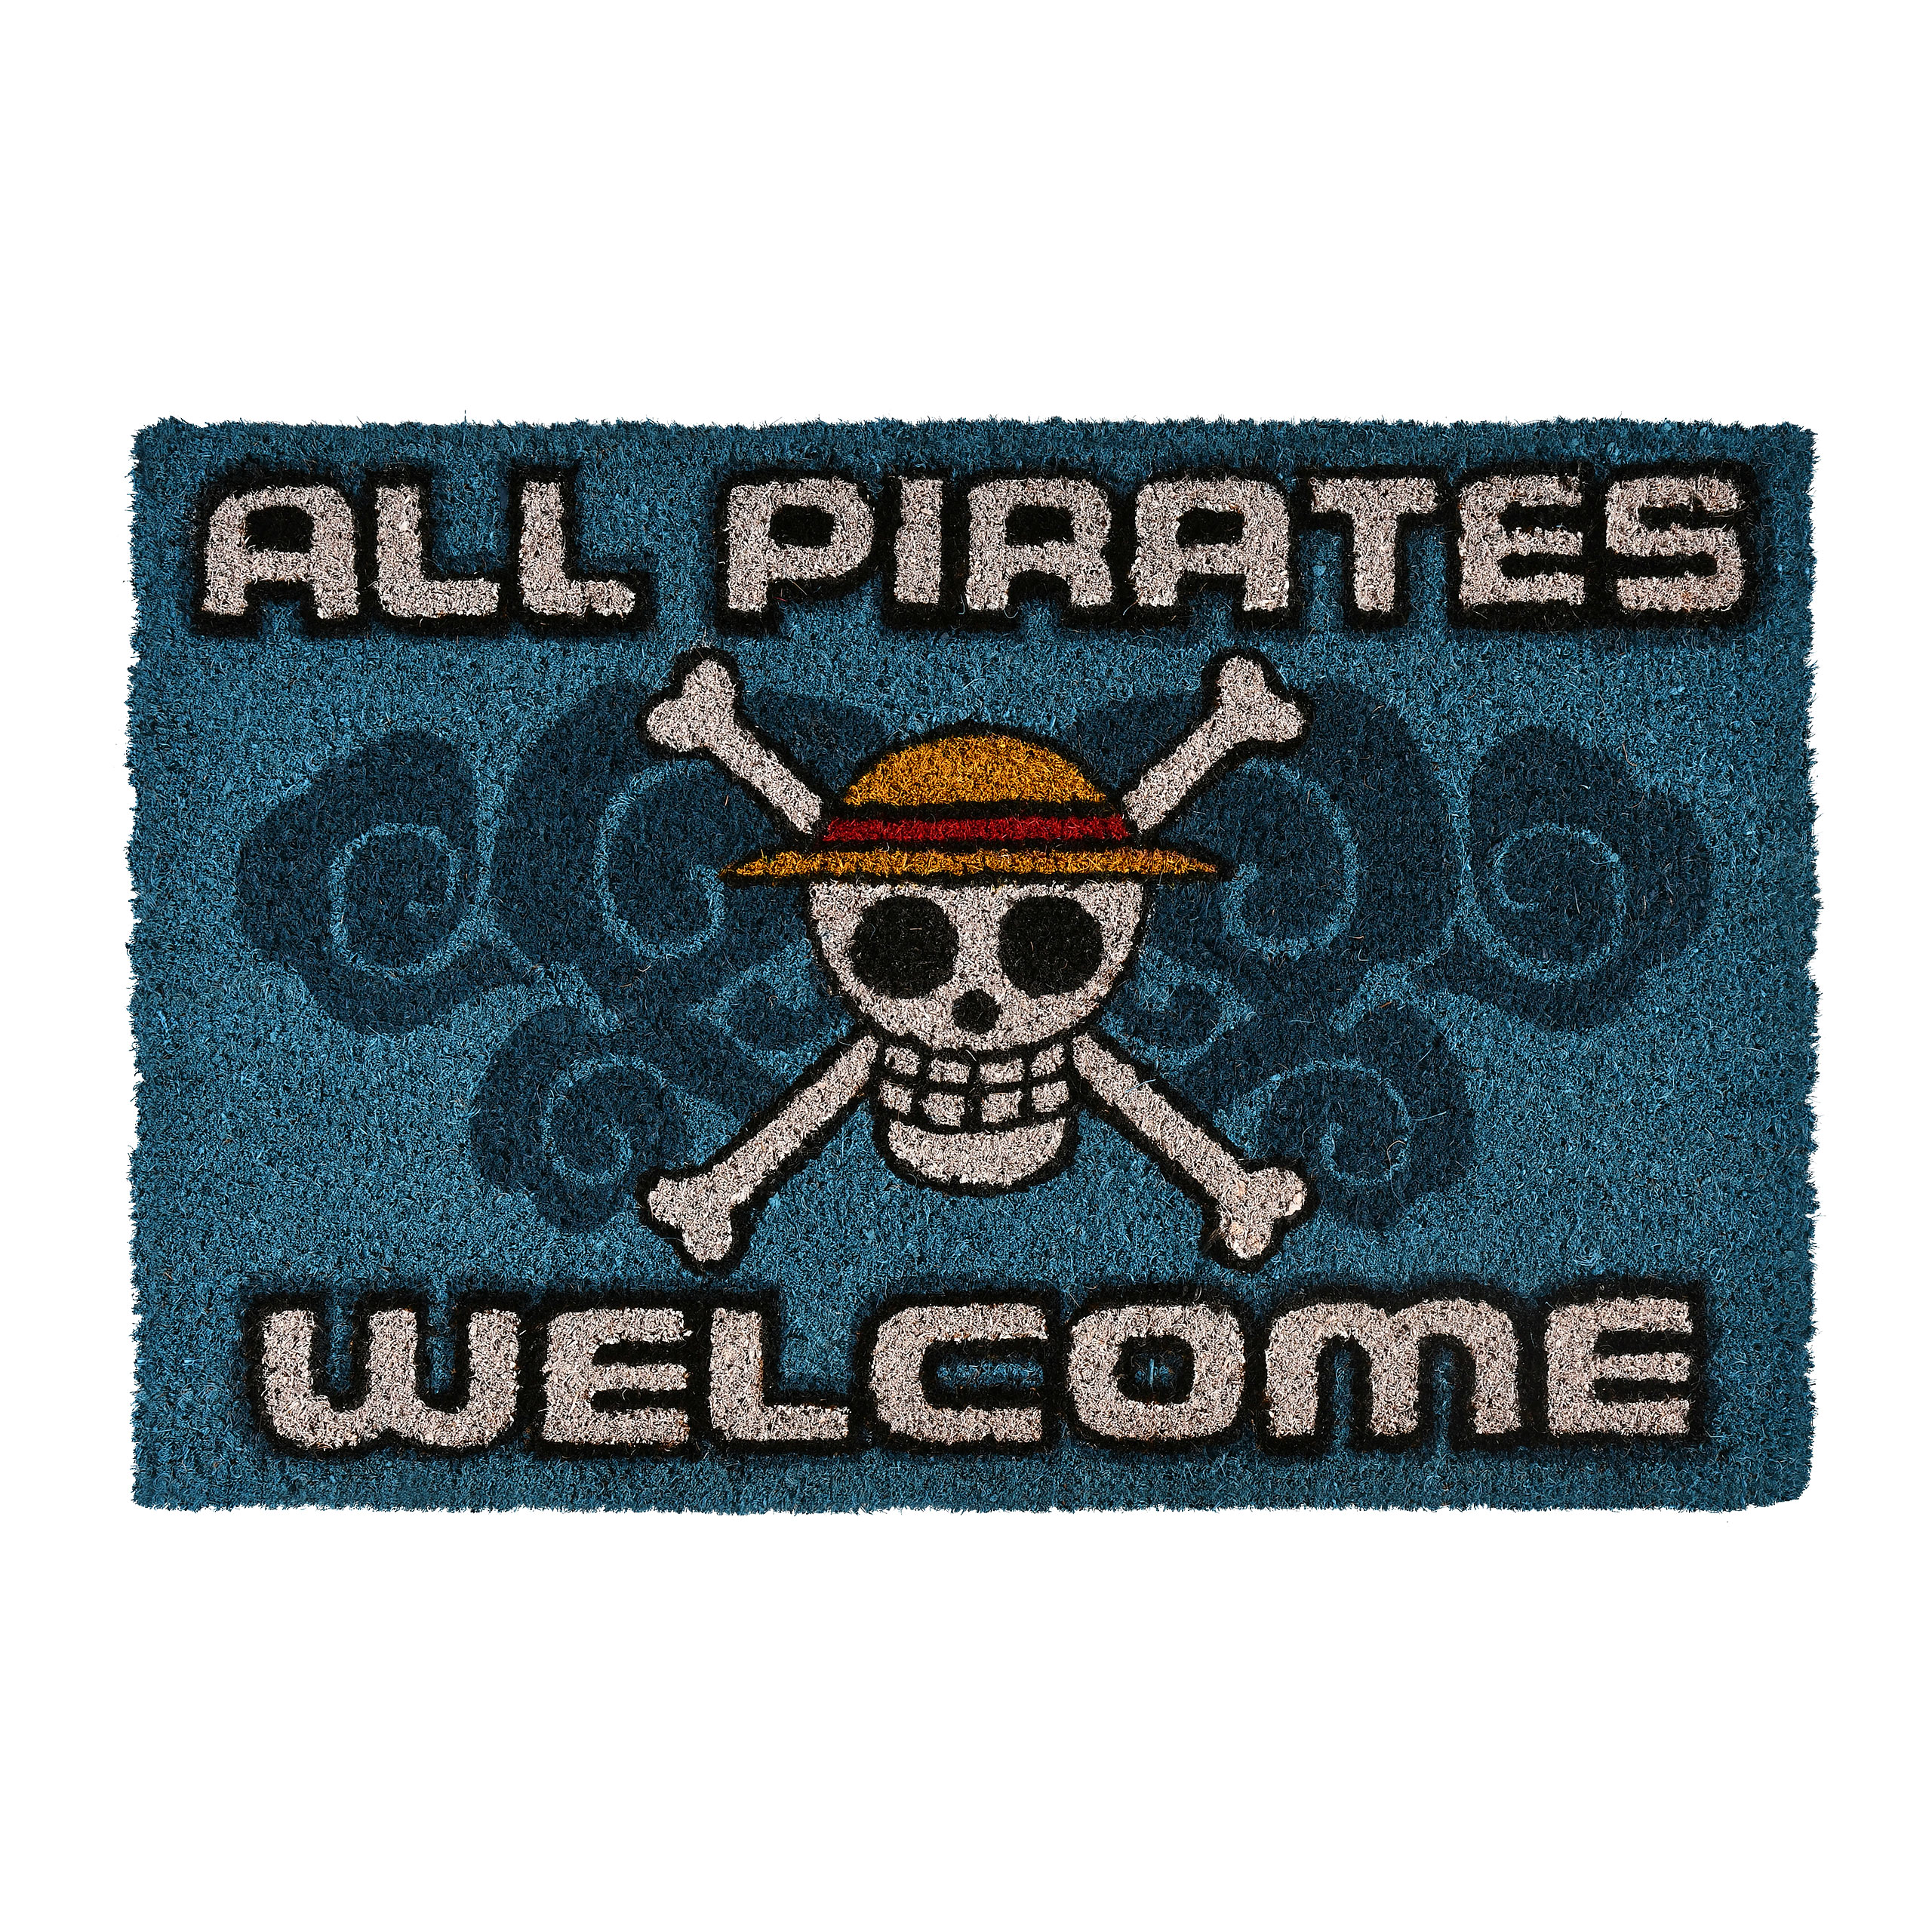 One Piece - All Pirates Welcome Fußmatte